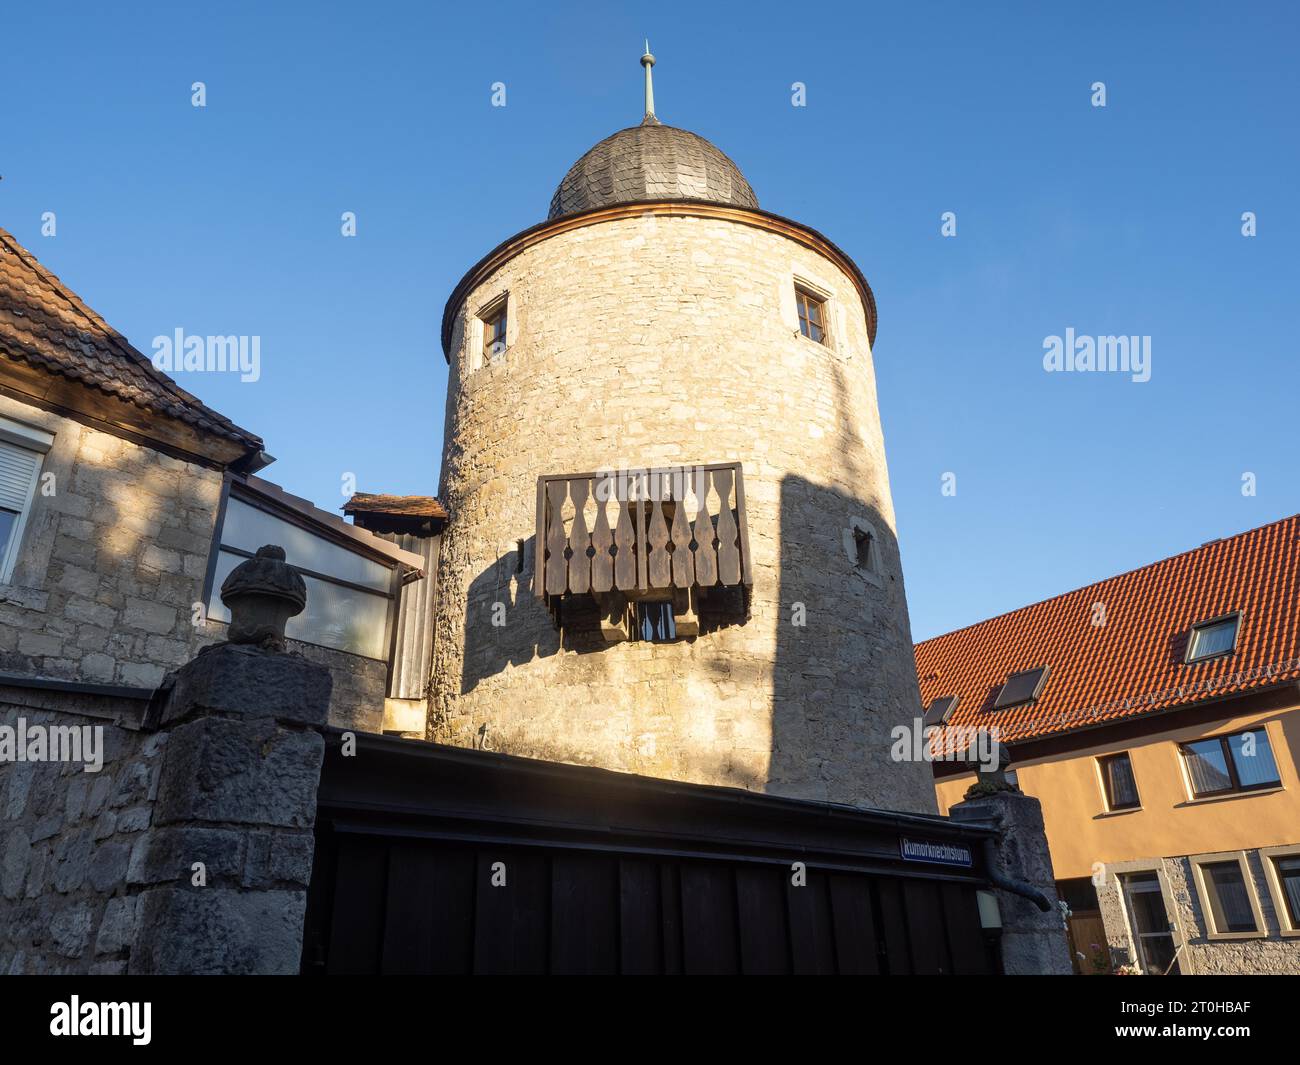 Rumorknechtsturm, old town tower, Sommerhausen, Mainfranken, Lower Franconia, Franconia, Bavaria, Germany Stock Photo